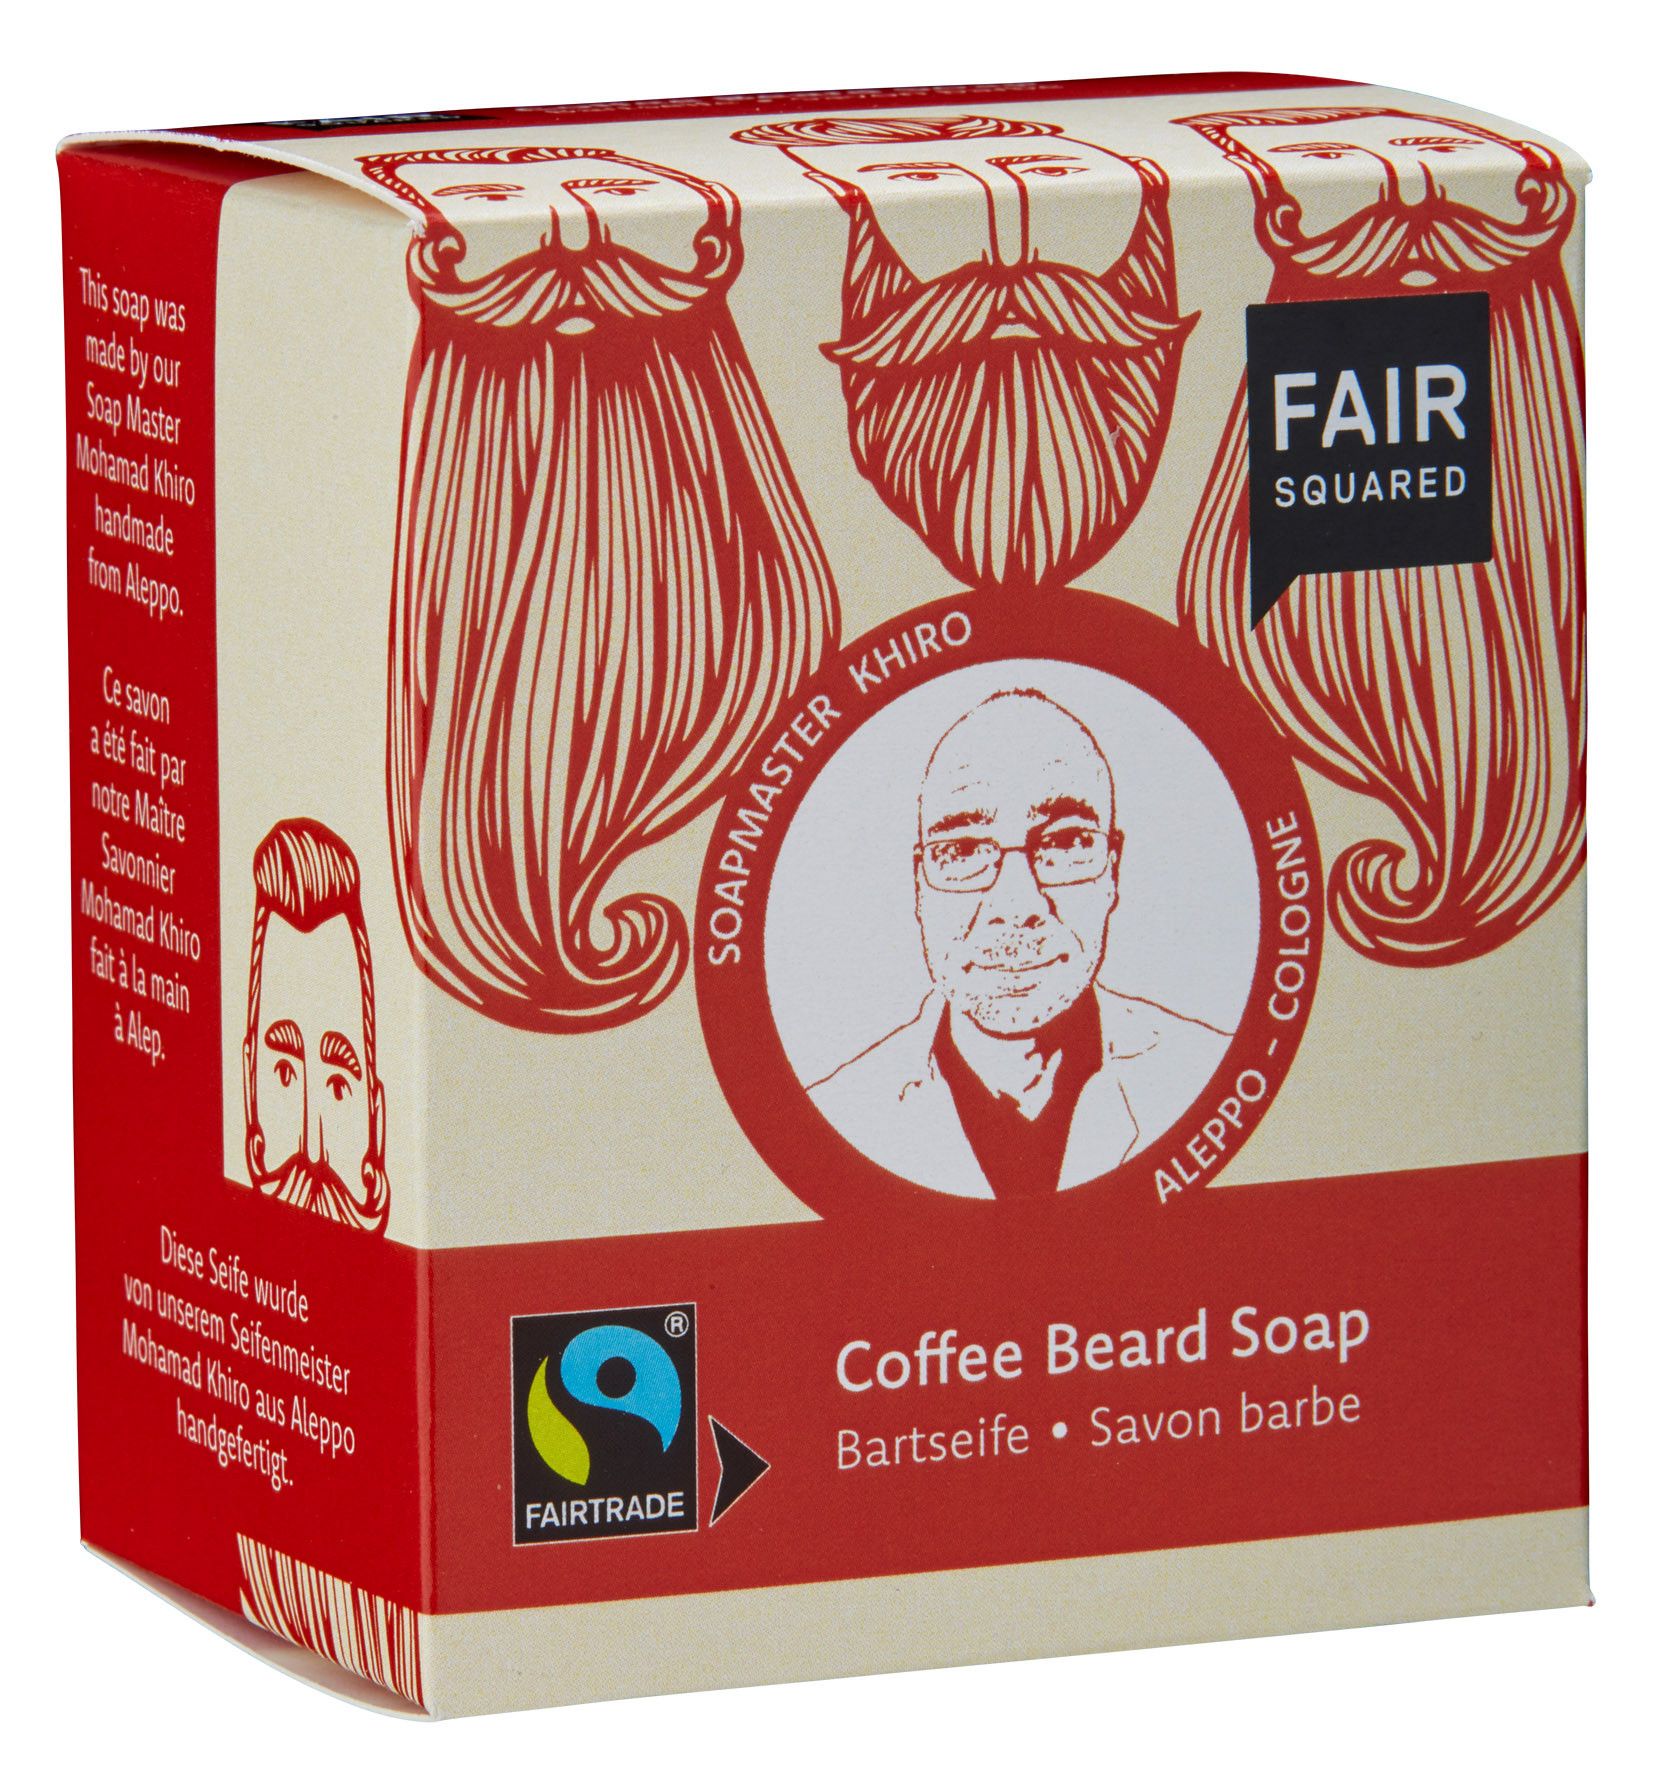 FAIR SQUARED Coffee Beardsoap